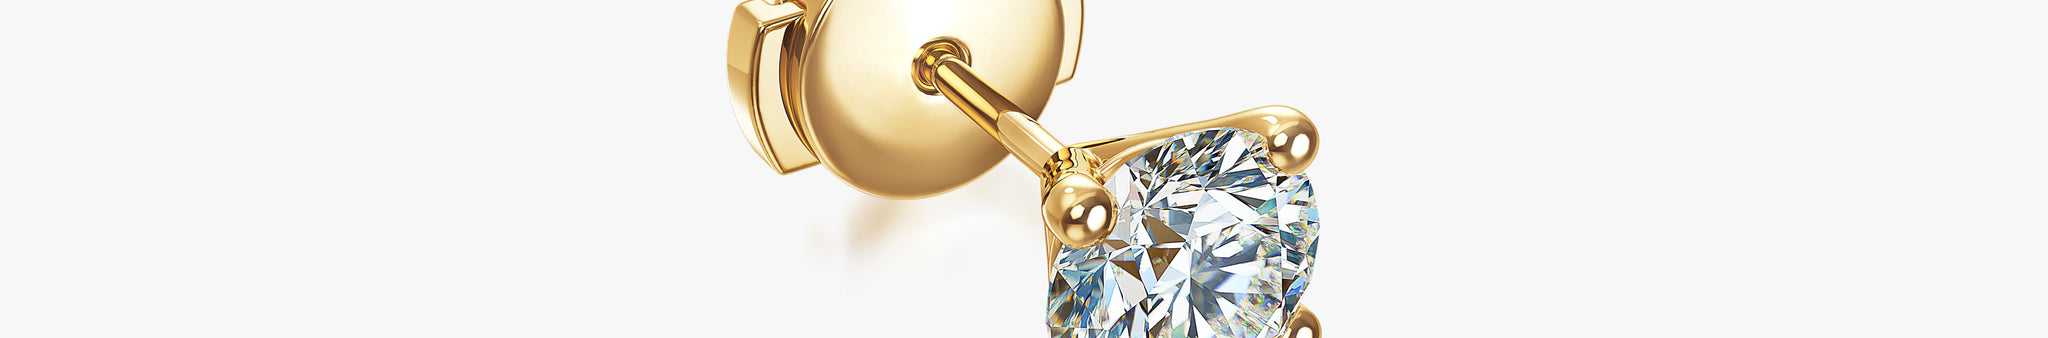 J'EVAR 18KT Yellow Gold ALTR Lab Grown Diamond Stud Earrings with Guardian Backs Lock View